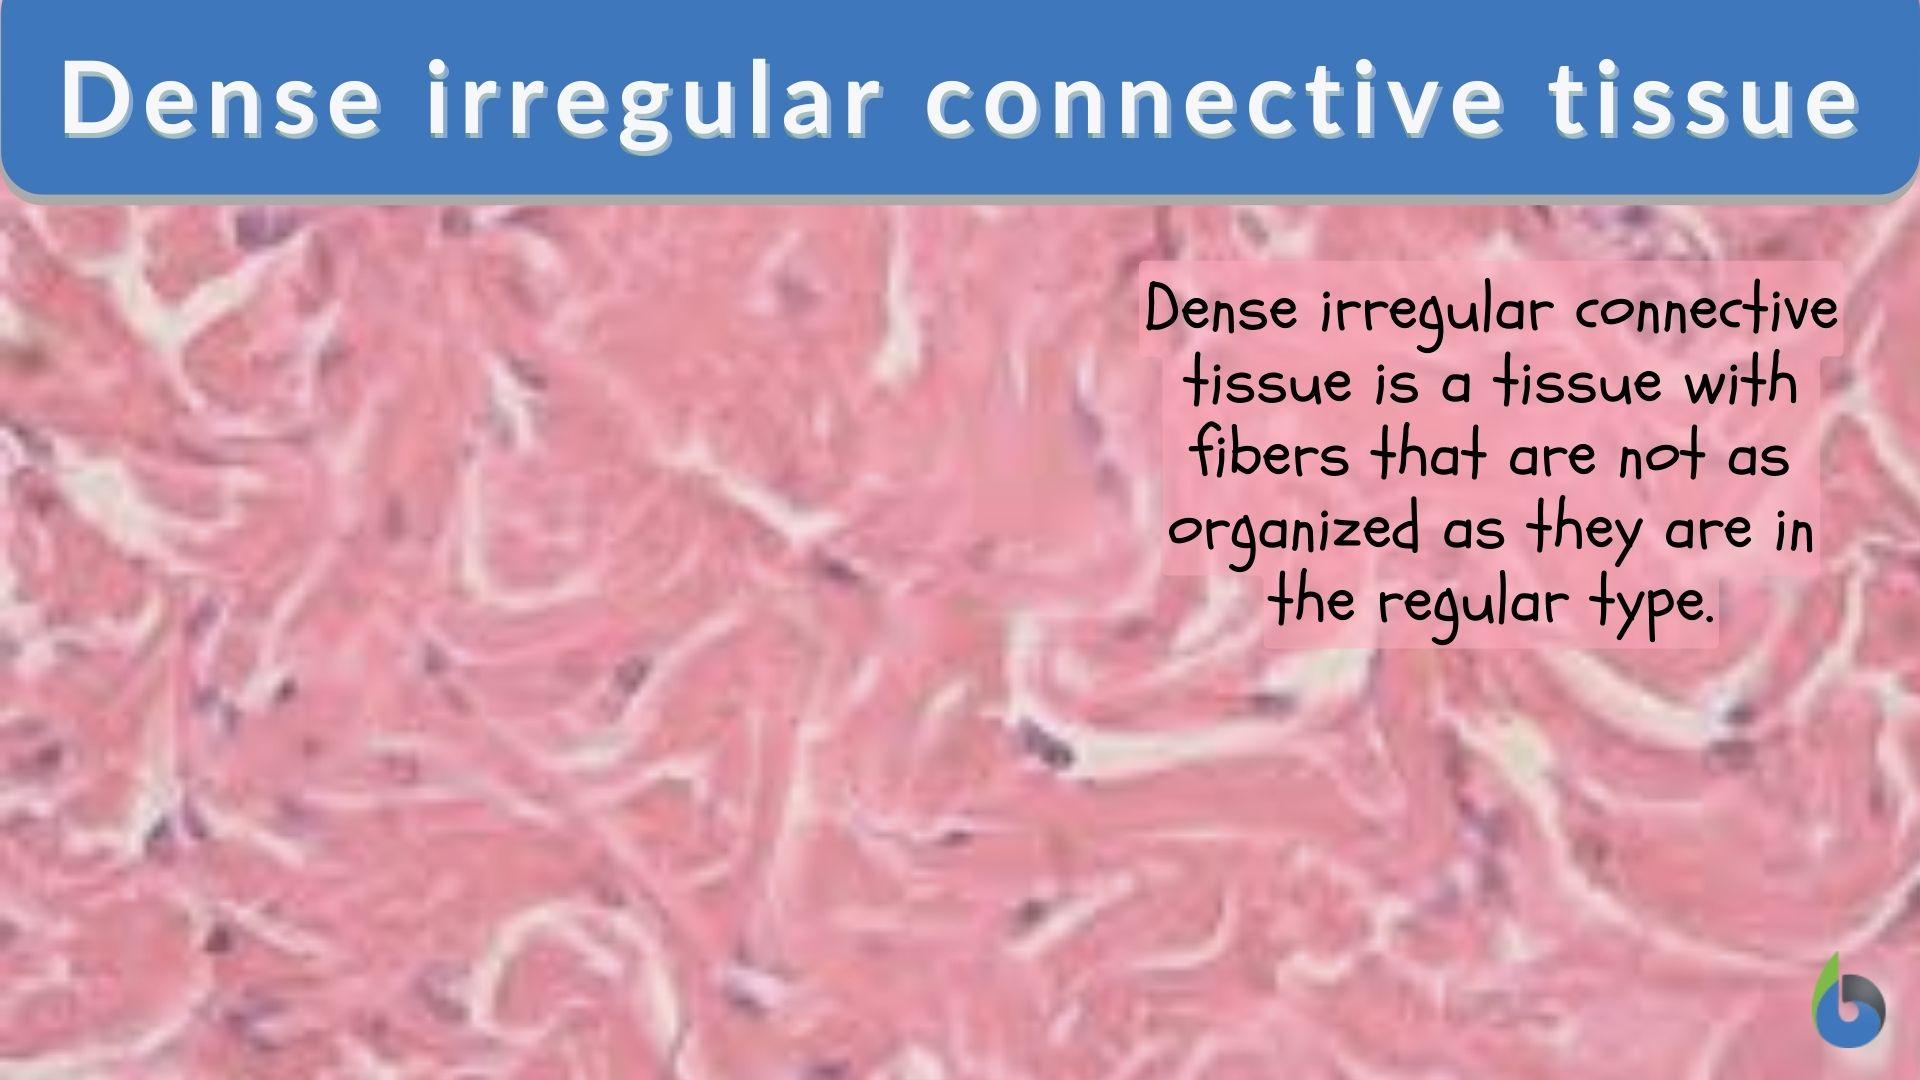 dense connective tissue slide